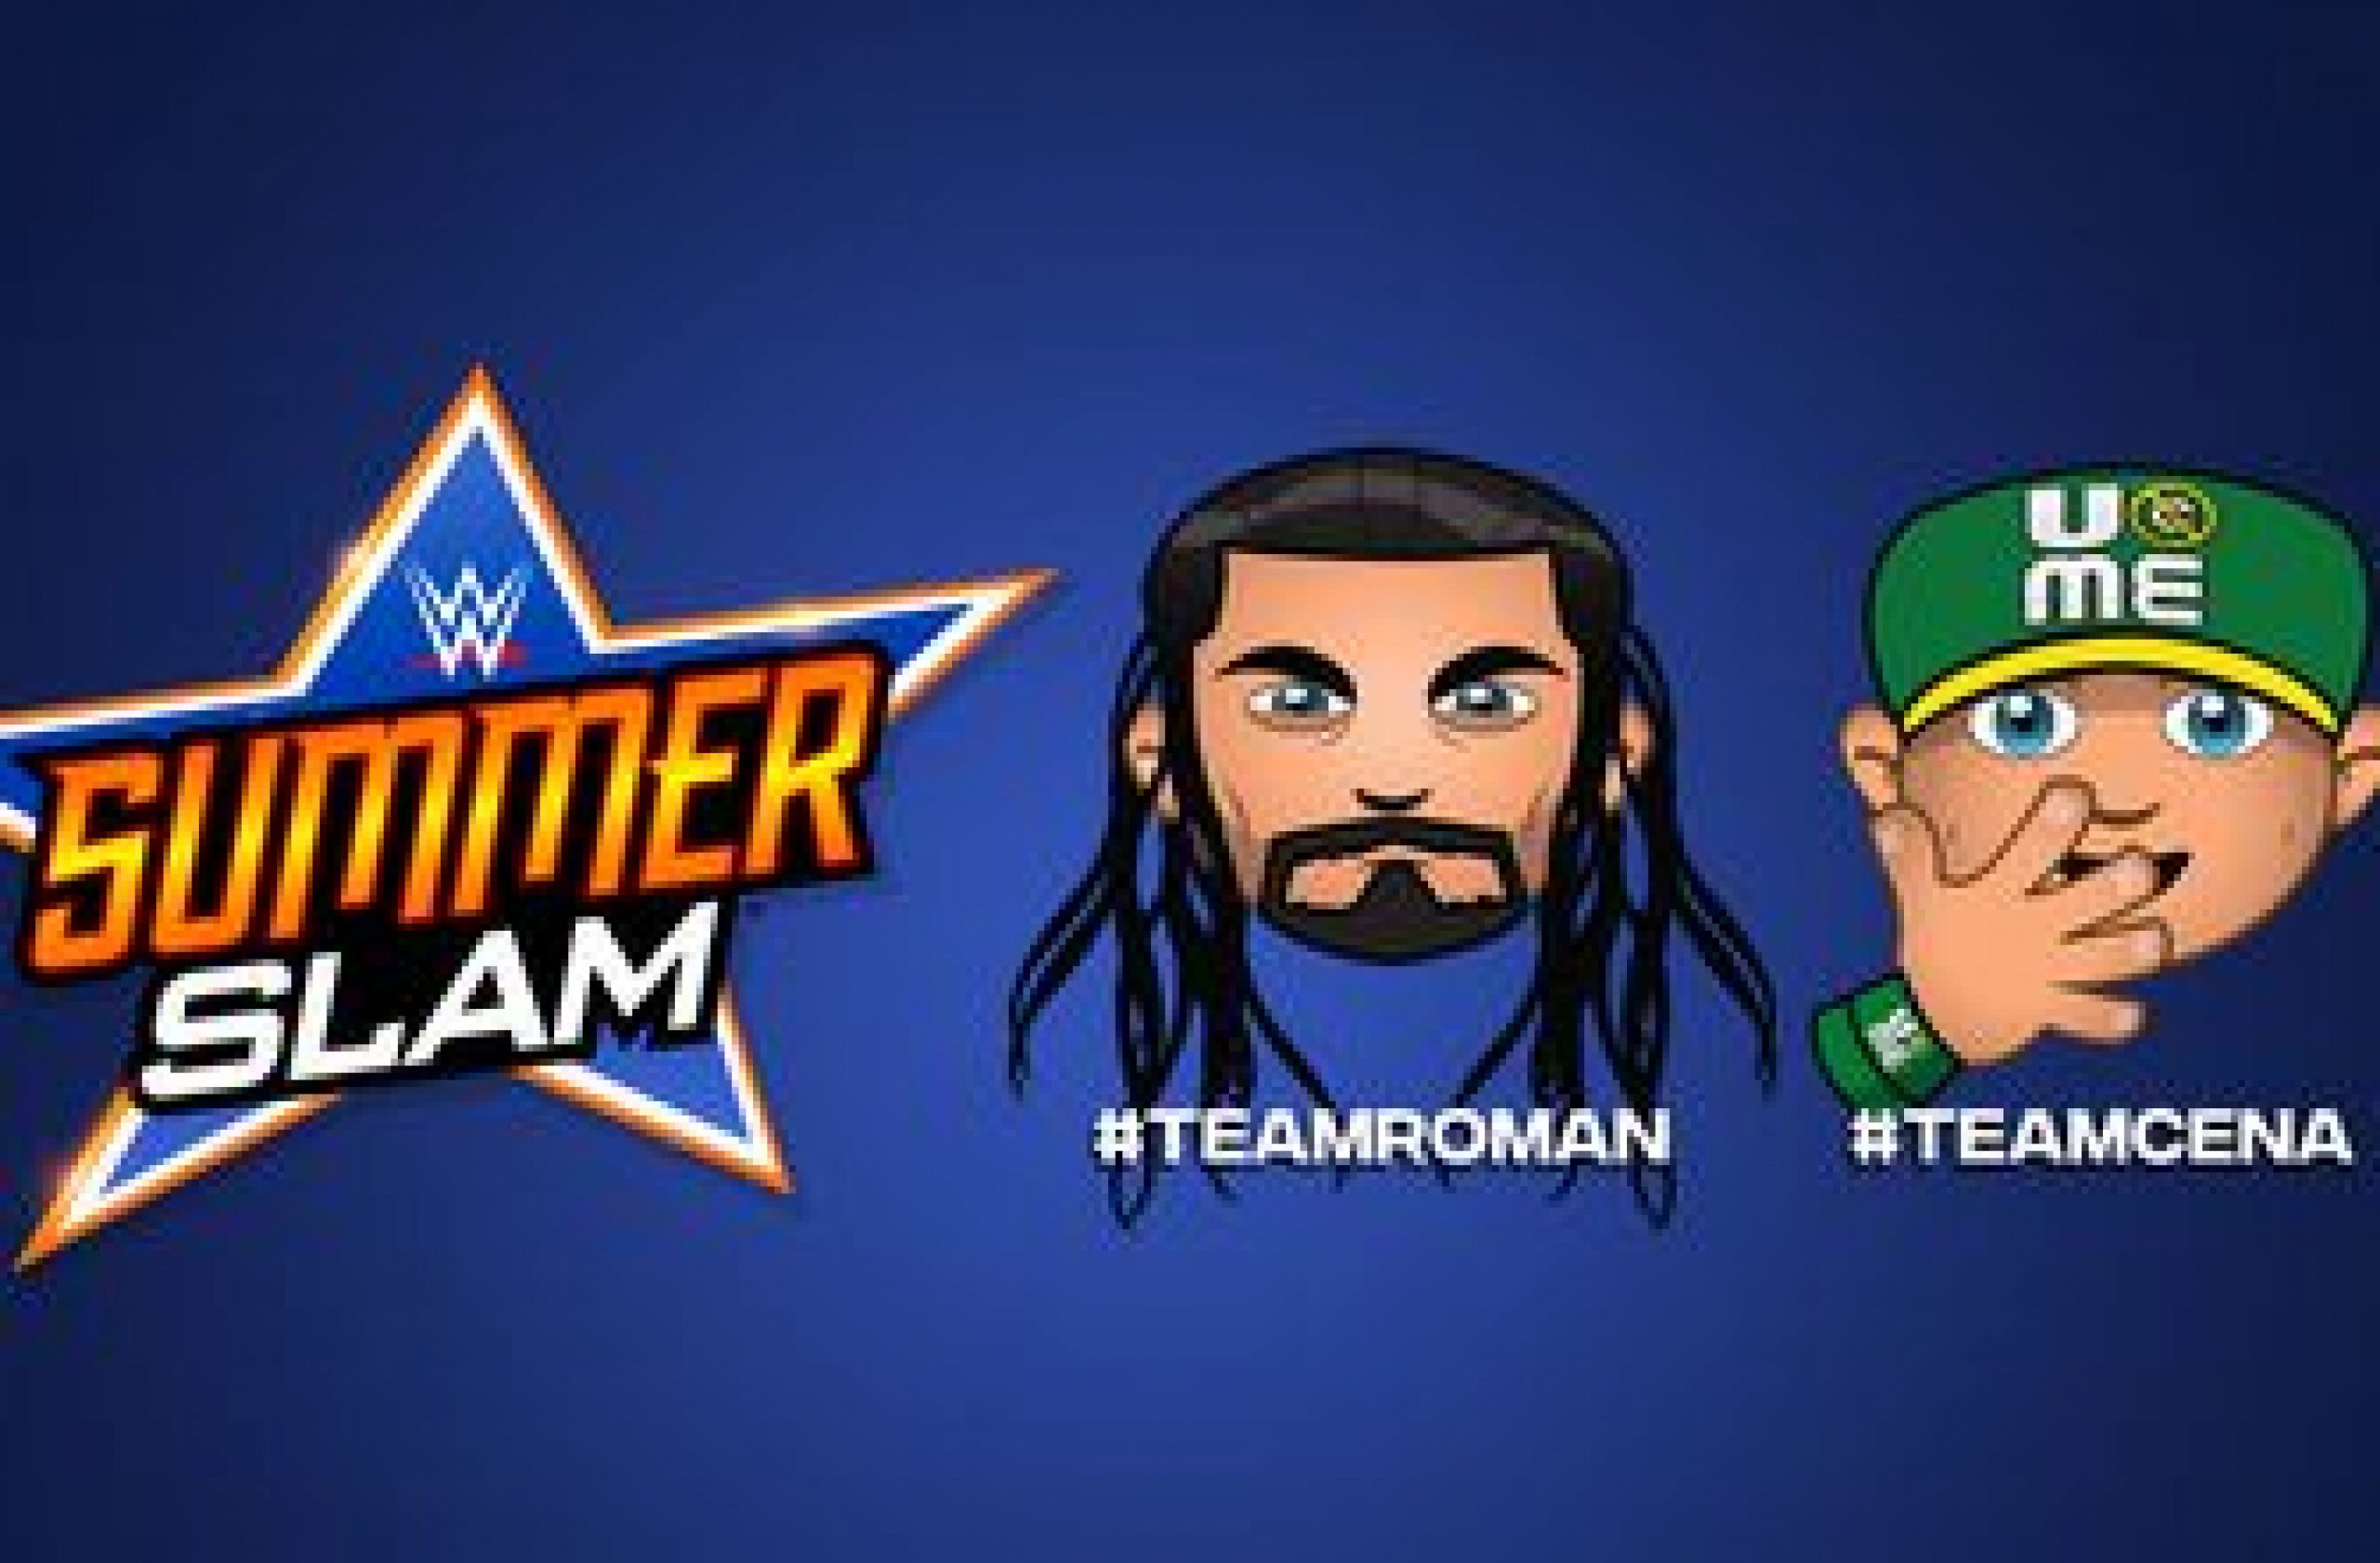 Instagram debuts custom Roman Reigns and John Cena filter ahead of SummerSlam